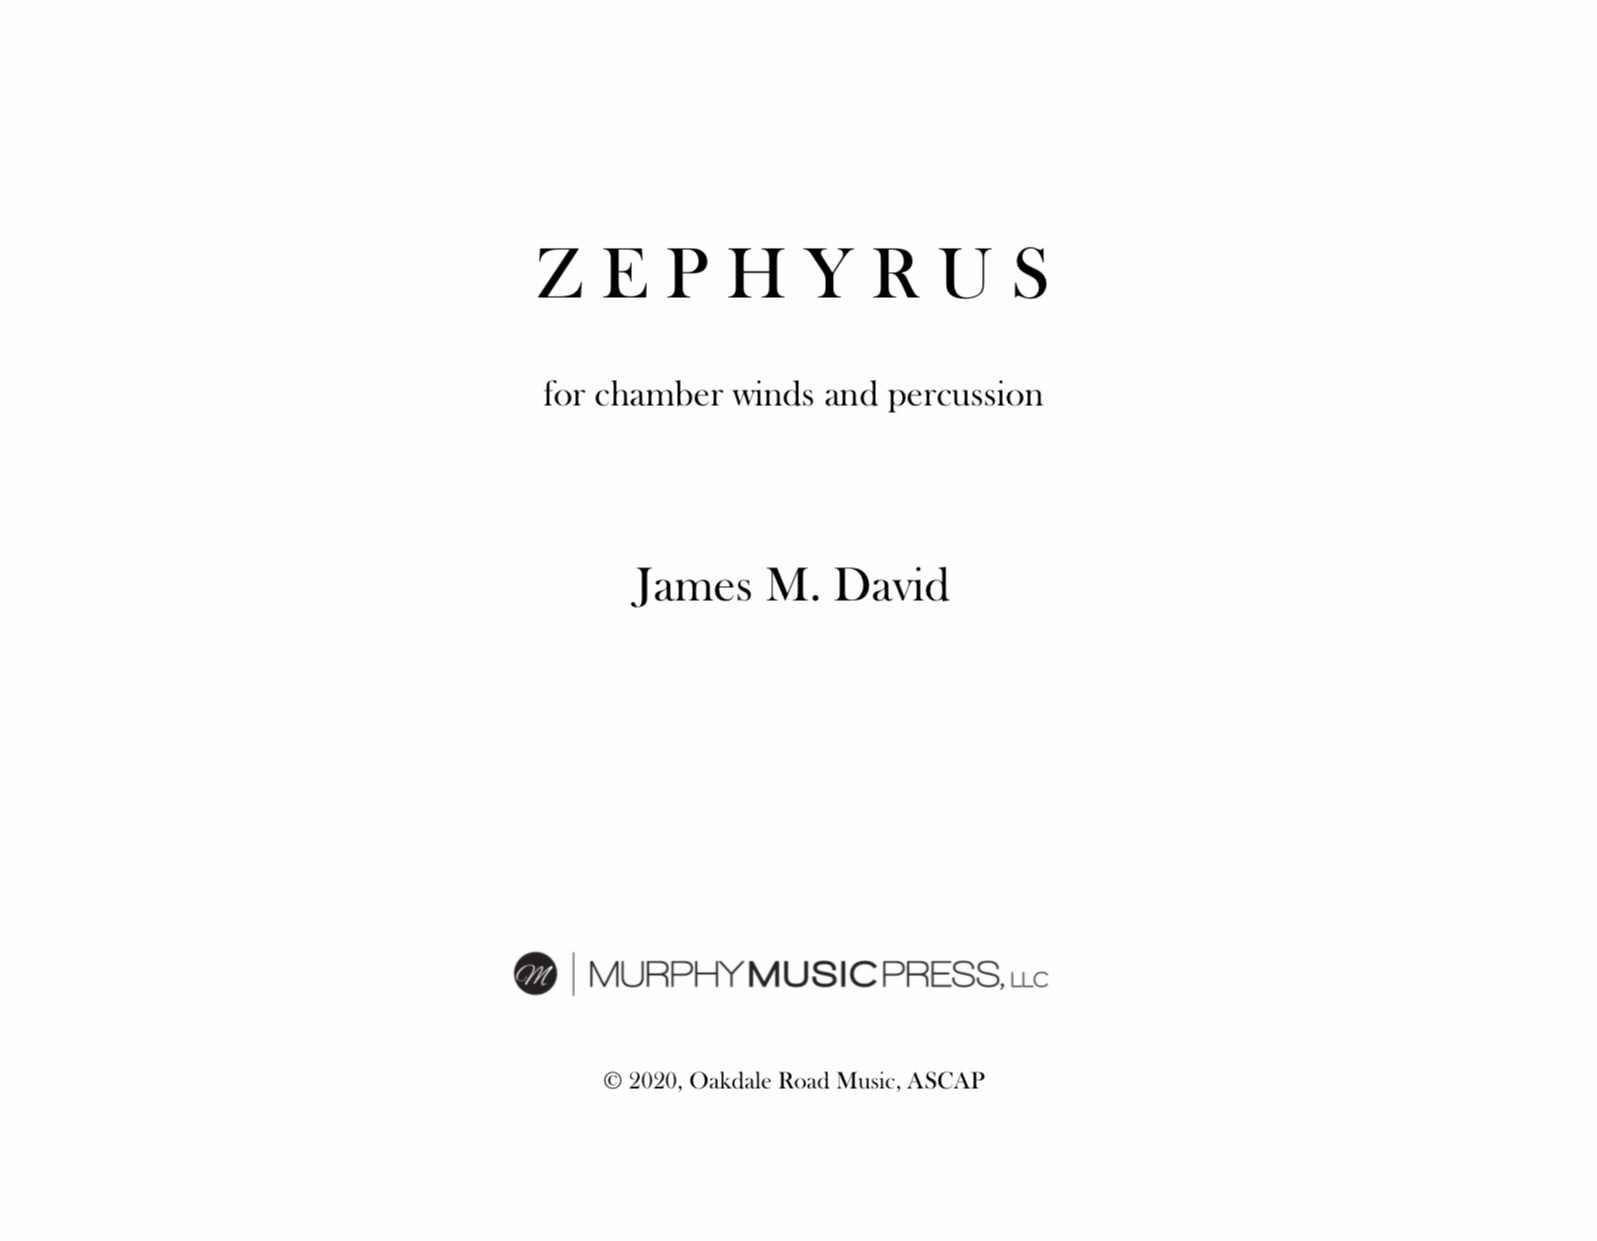 Zephyrus by James David